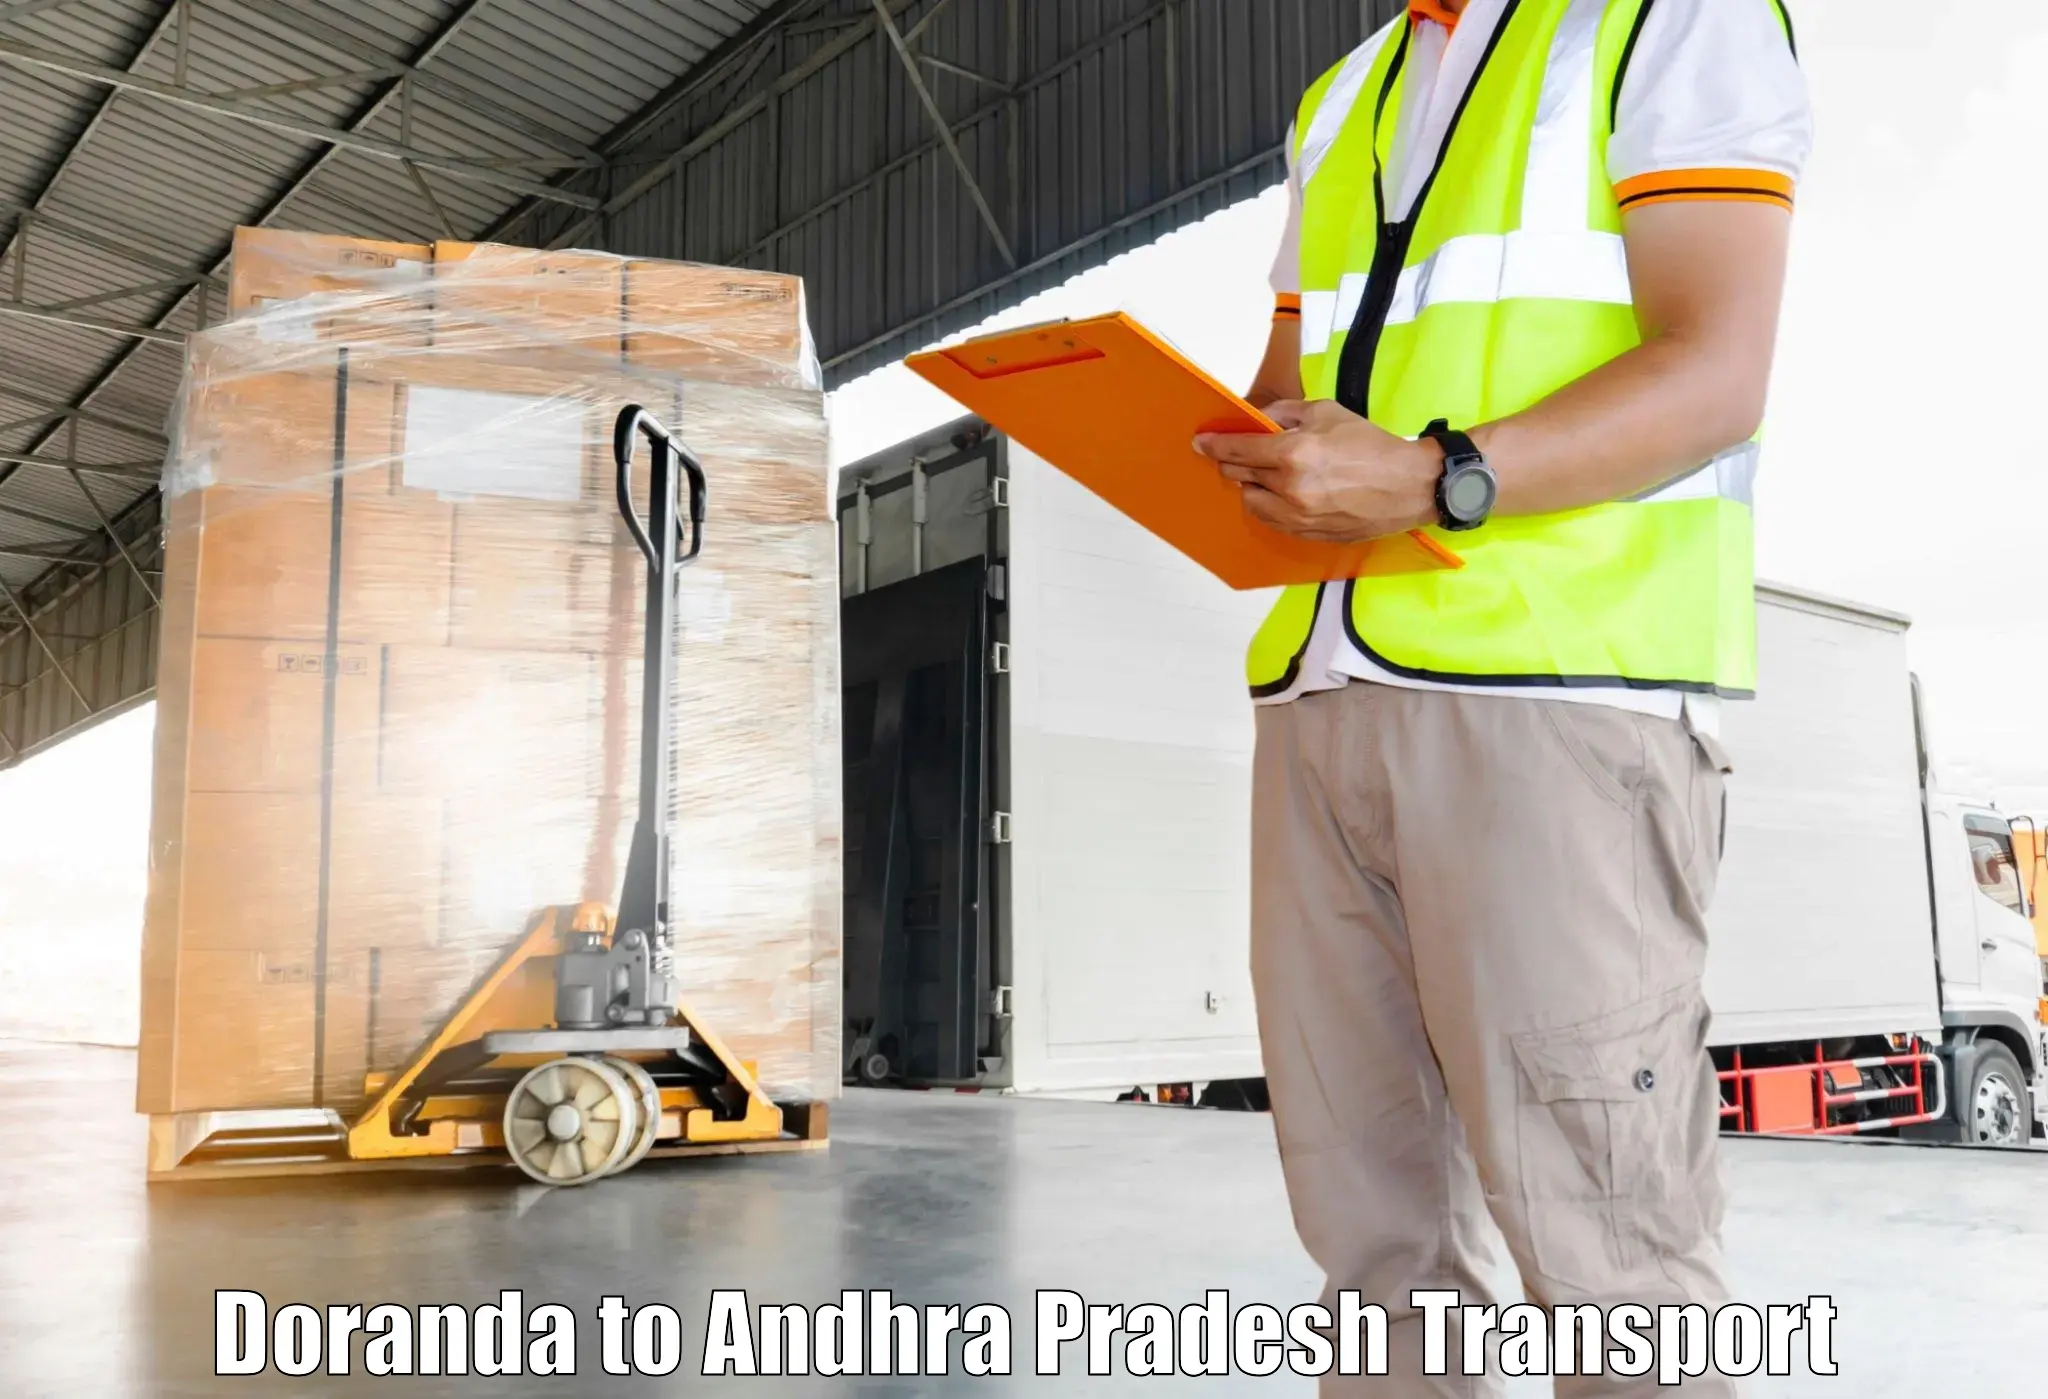 Transport in sharing Doranda to Andhra Pradesh